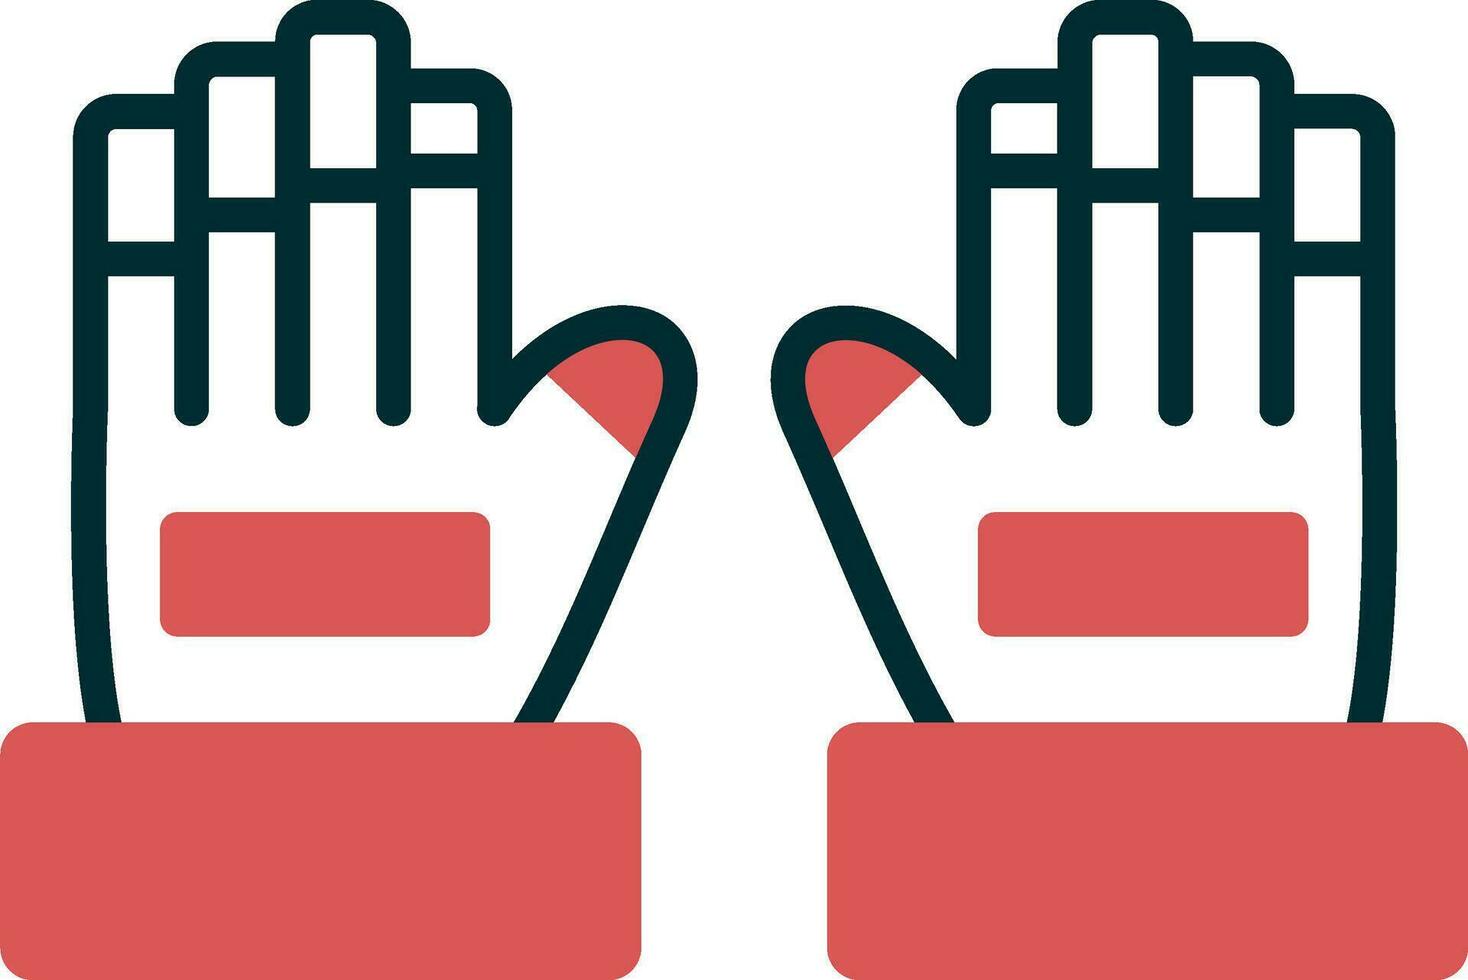 hand handske vektor ikon